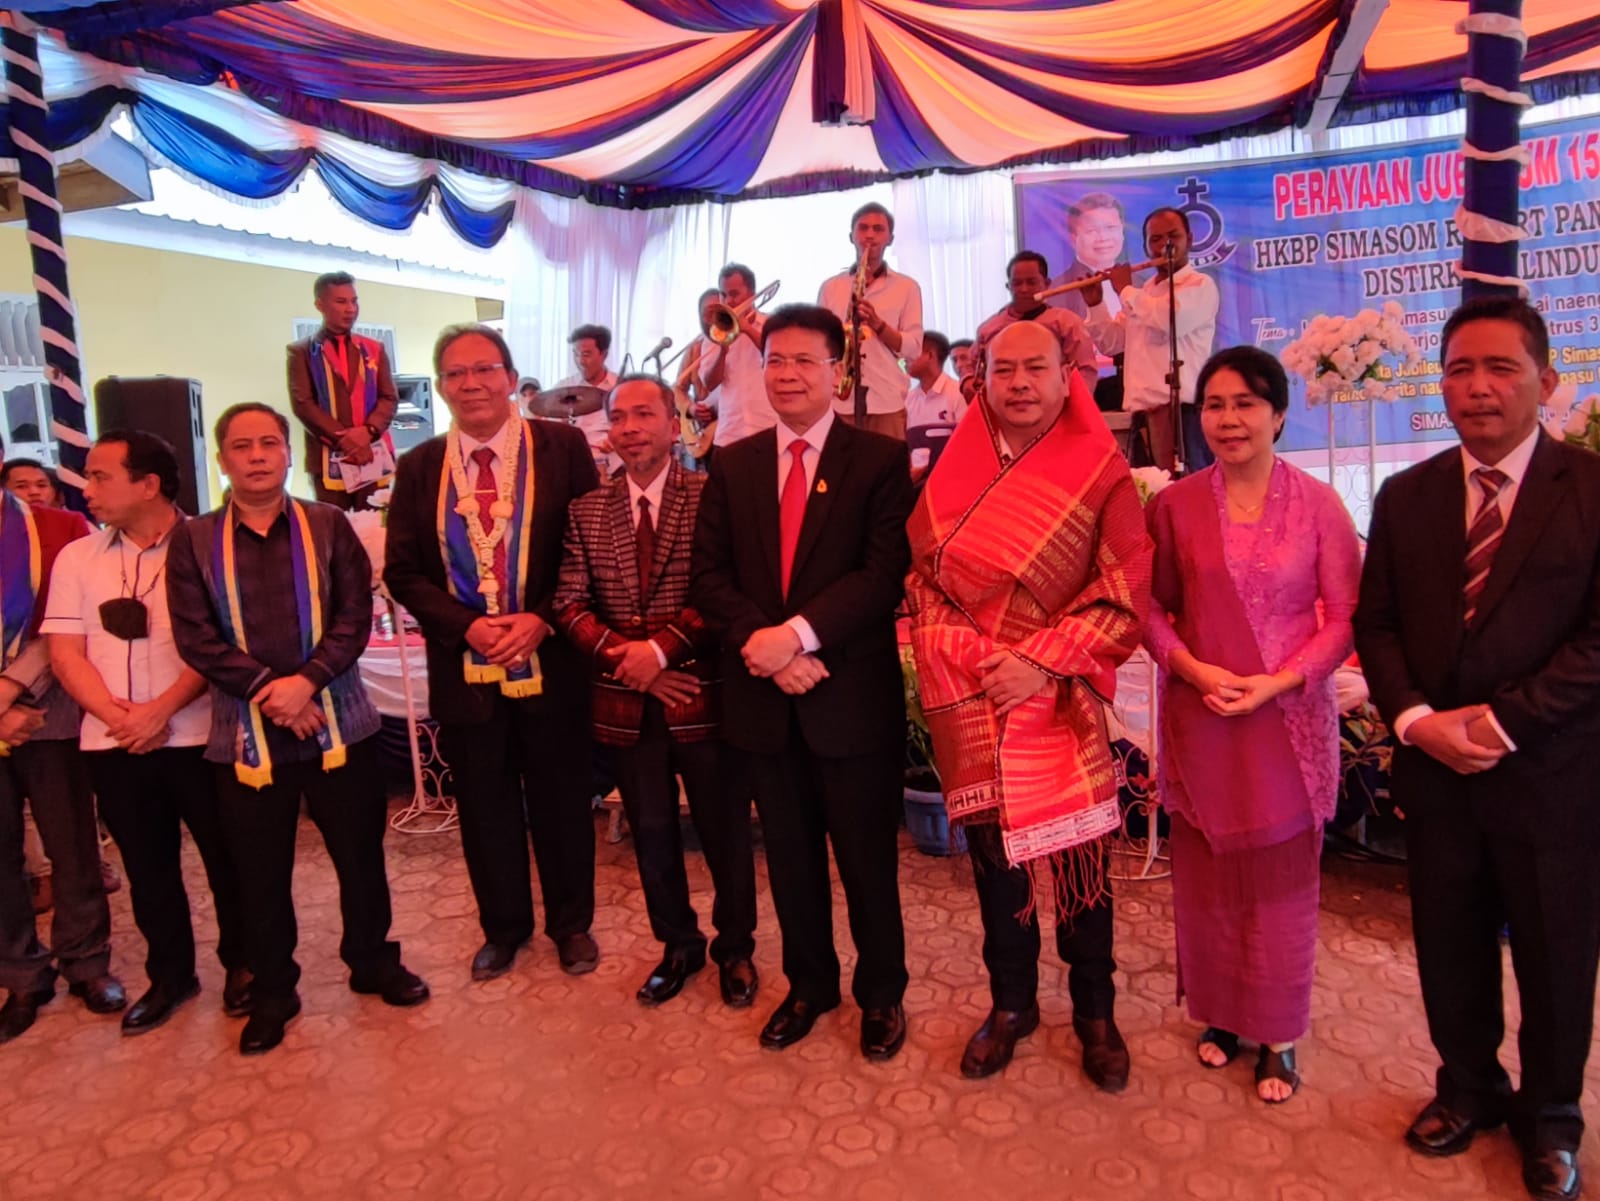 Bupati Tapanuli Utara Hadiri Perayaan Jubileum 150 Tahun HKBP Simasom Ressort Pansurnapitu Distrik II Silindung